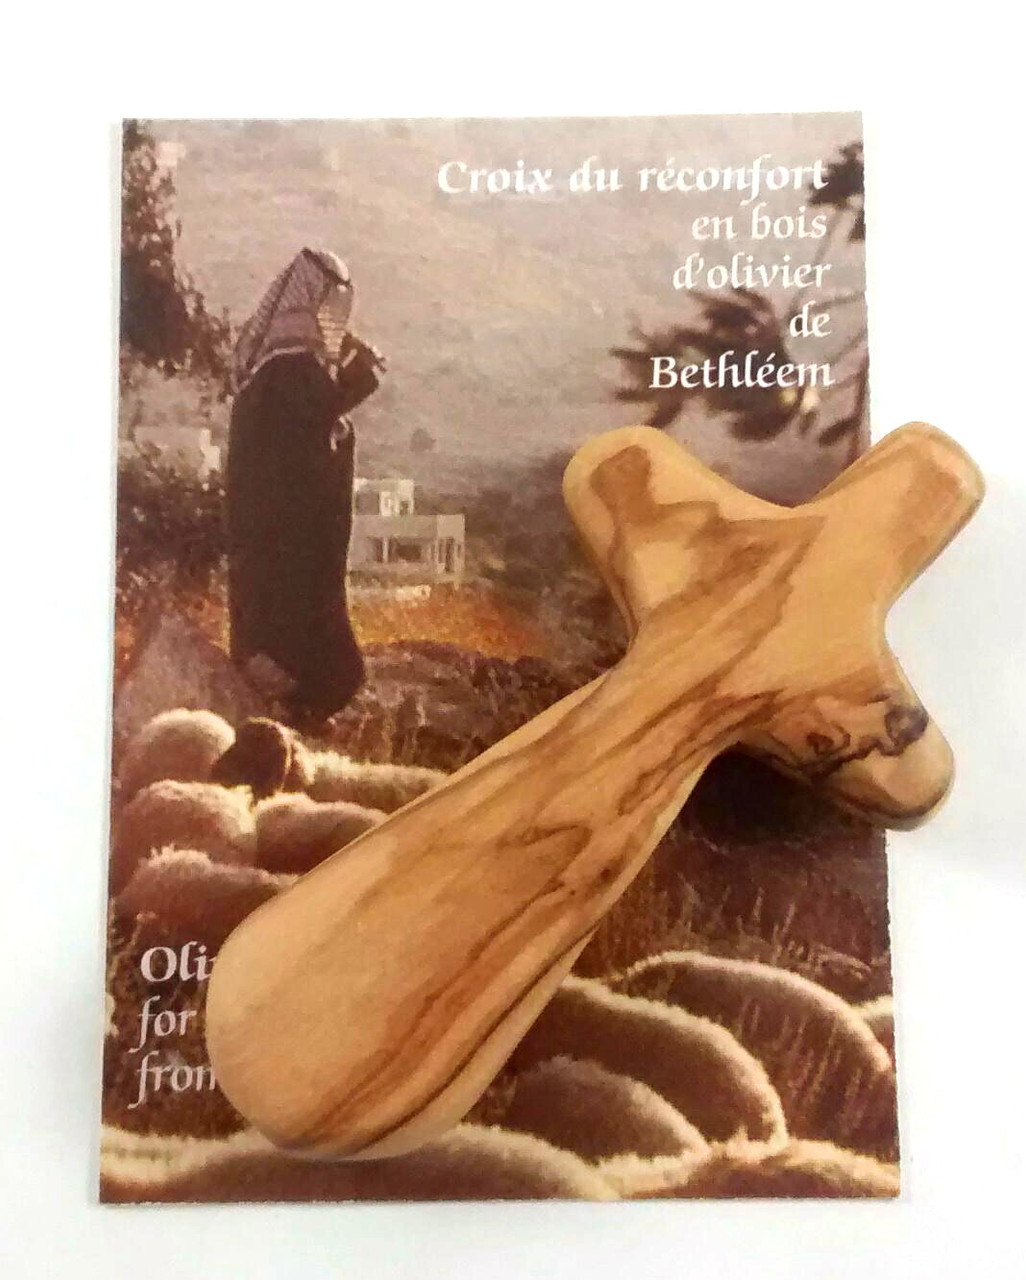 Comfort Cross-2.75 olivewood pocket cross — Good Shepherd Books & Gifts